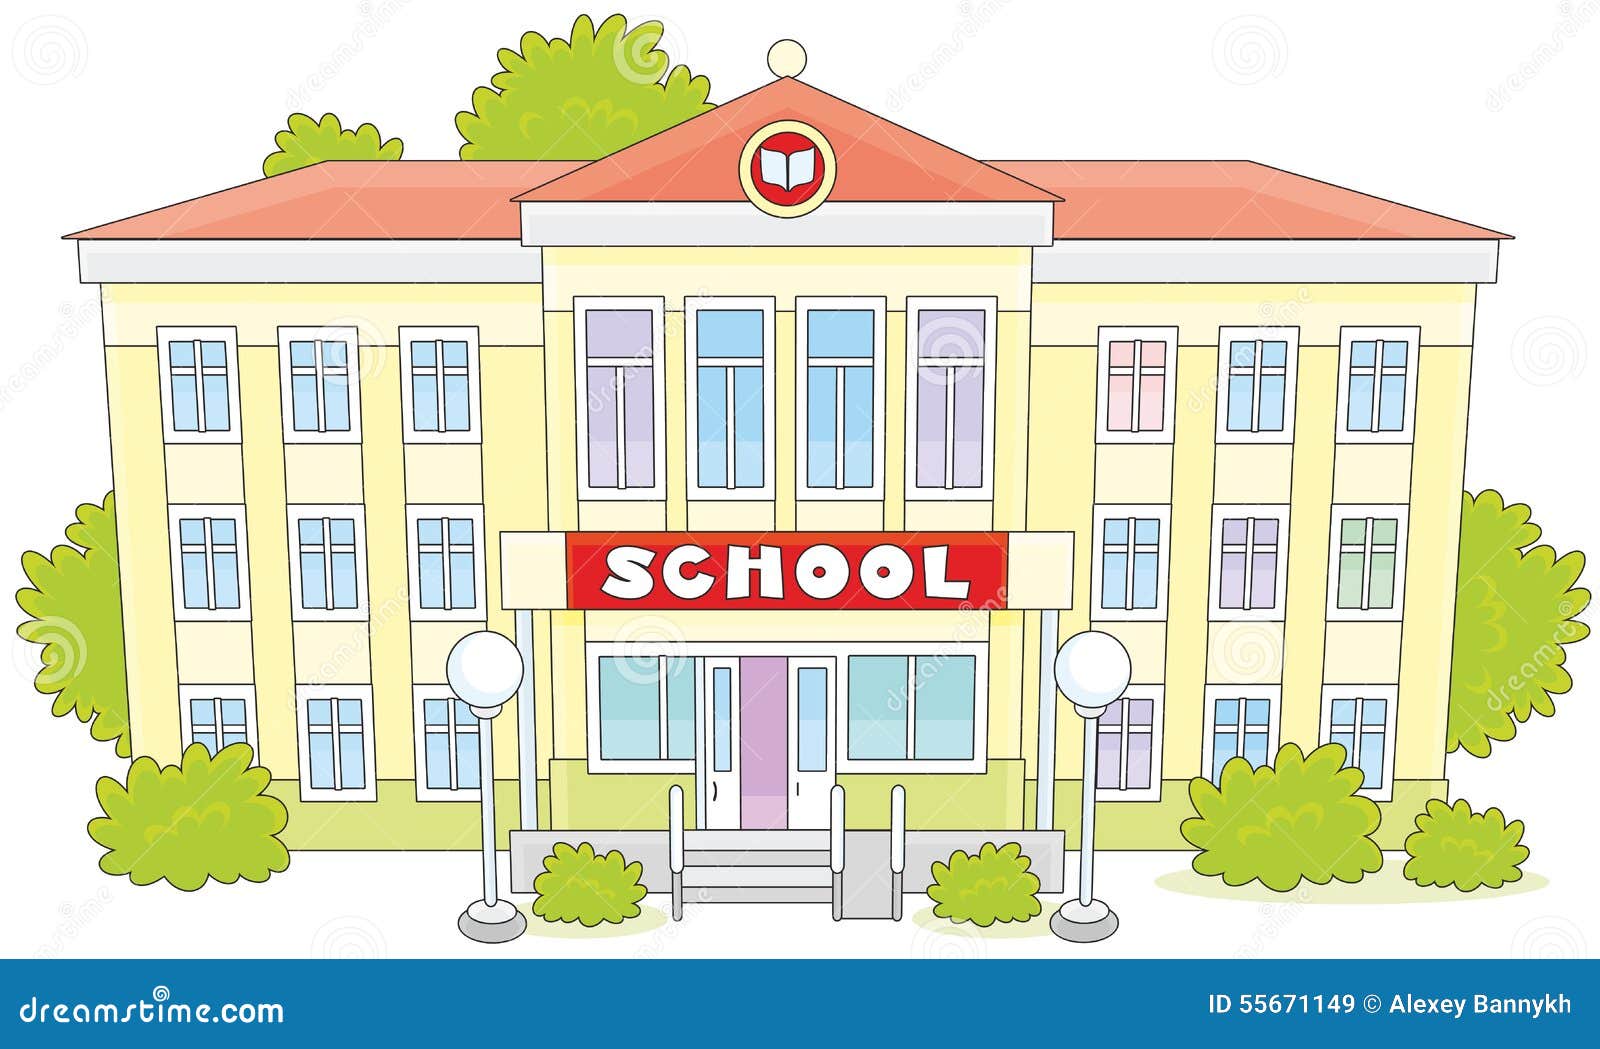 Рисунок школы номер 2. Школа рисунок. Здание школы для детей. Здание школы на белом фоне. Фасад школы рисунок.